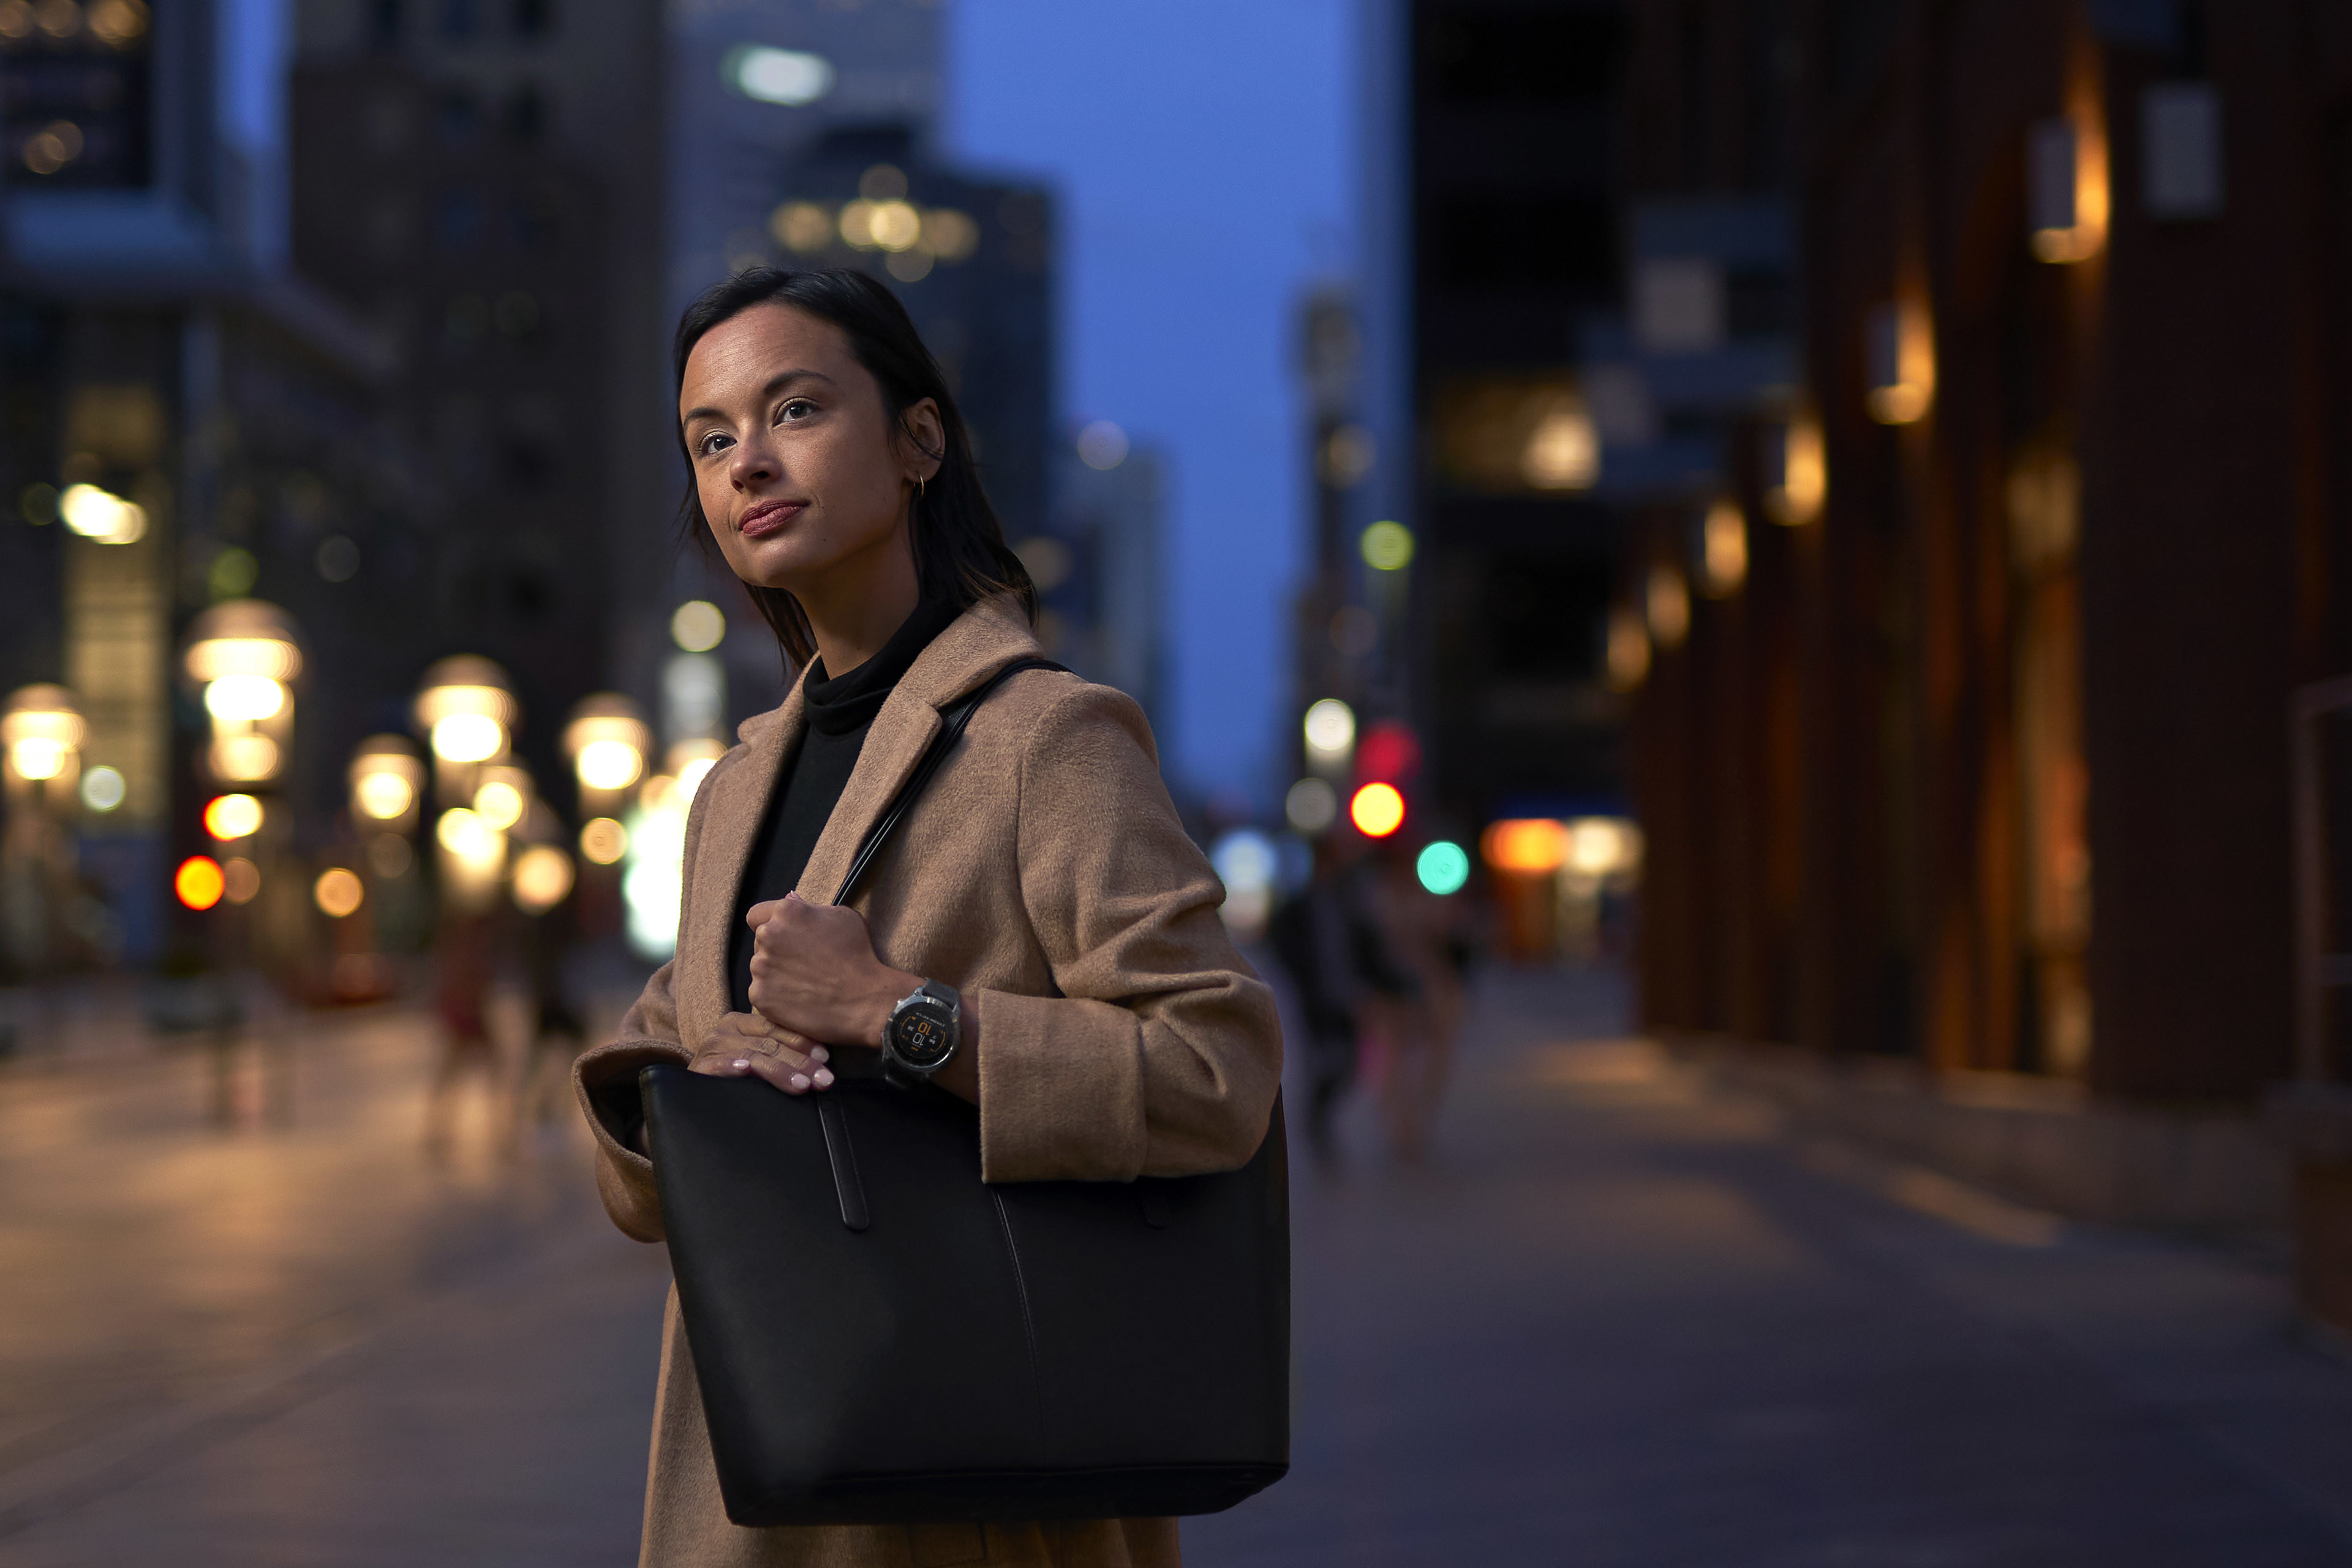 hek zak kom tot rust Luxe Garmin Epix smartwatch met oled-scherm belooft 16 dagen accu | TechFi